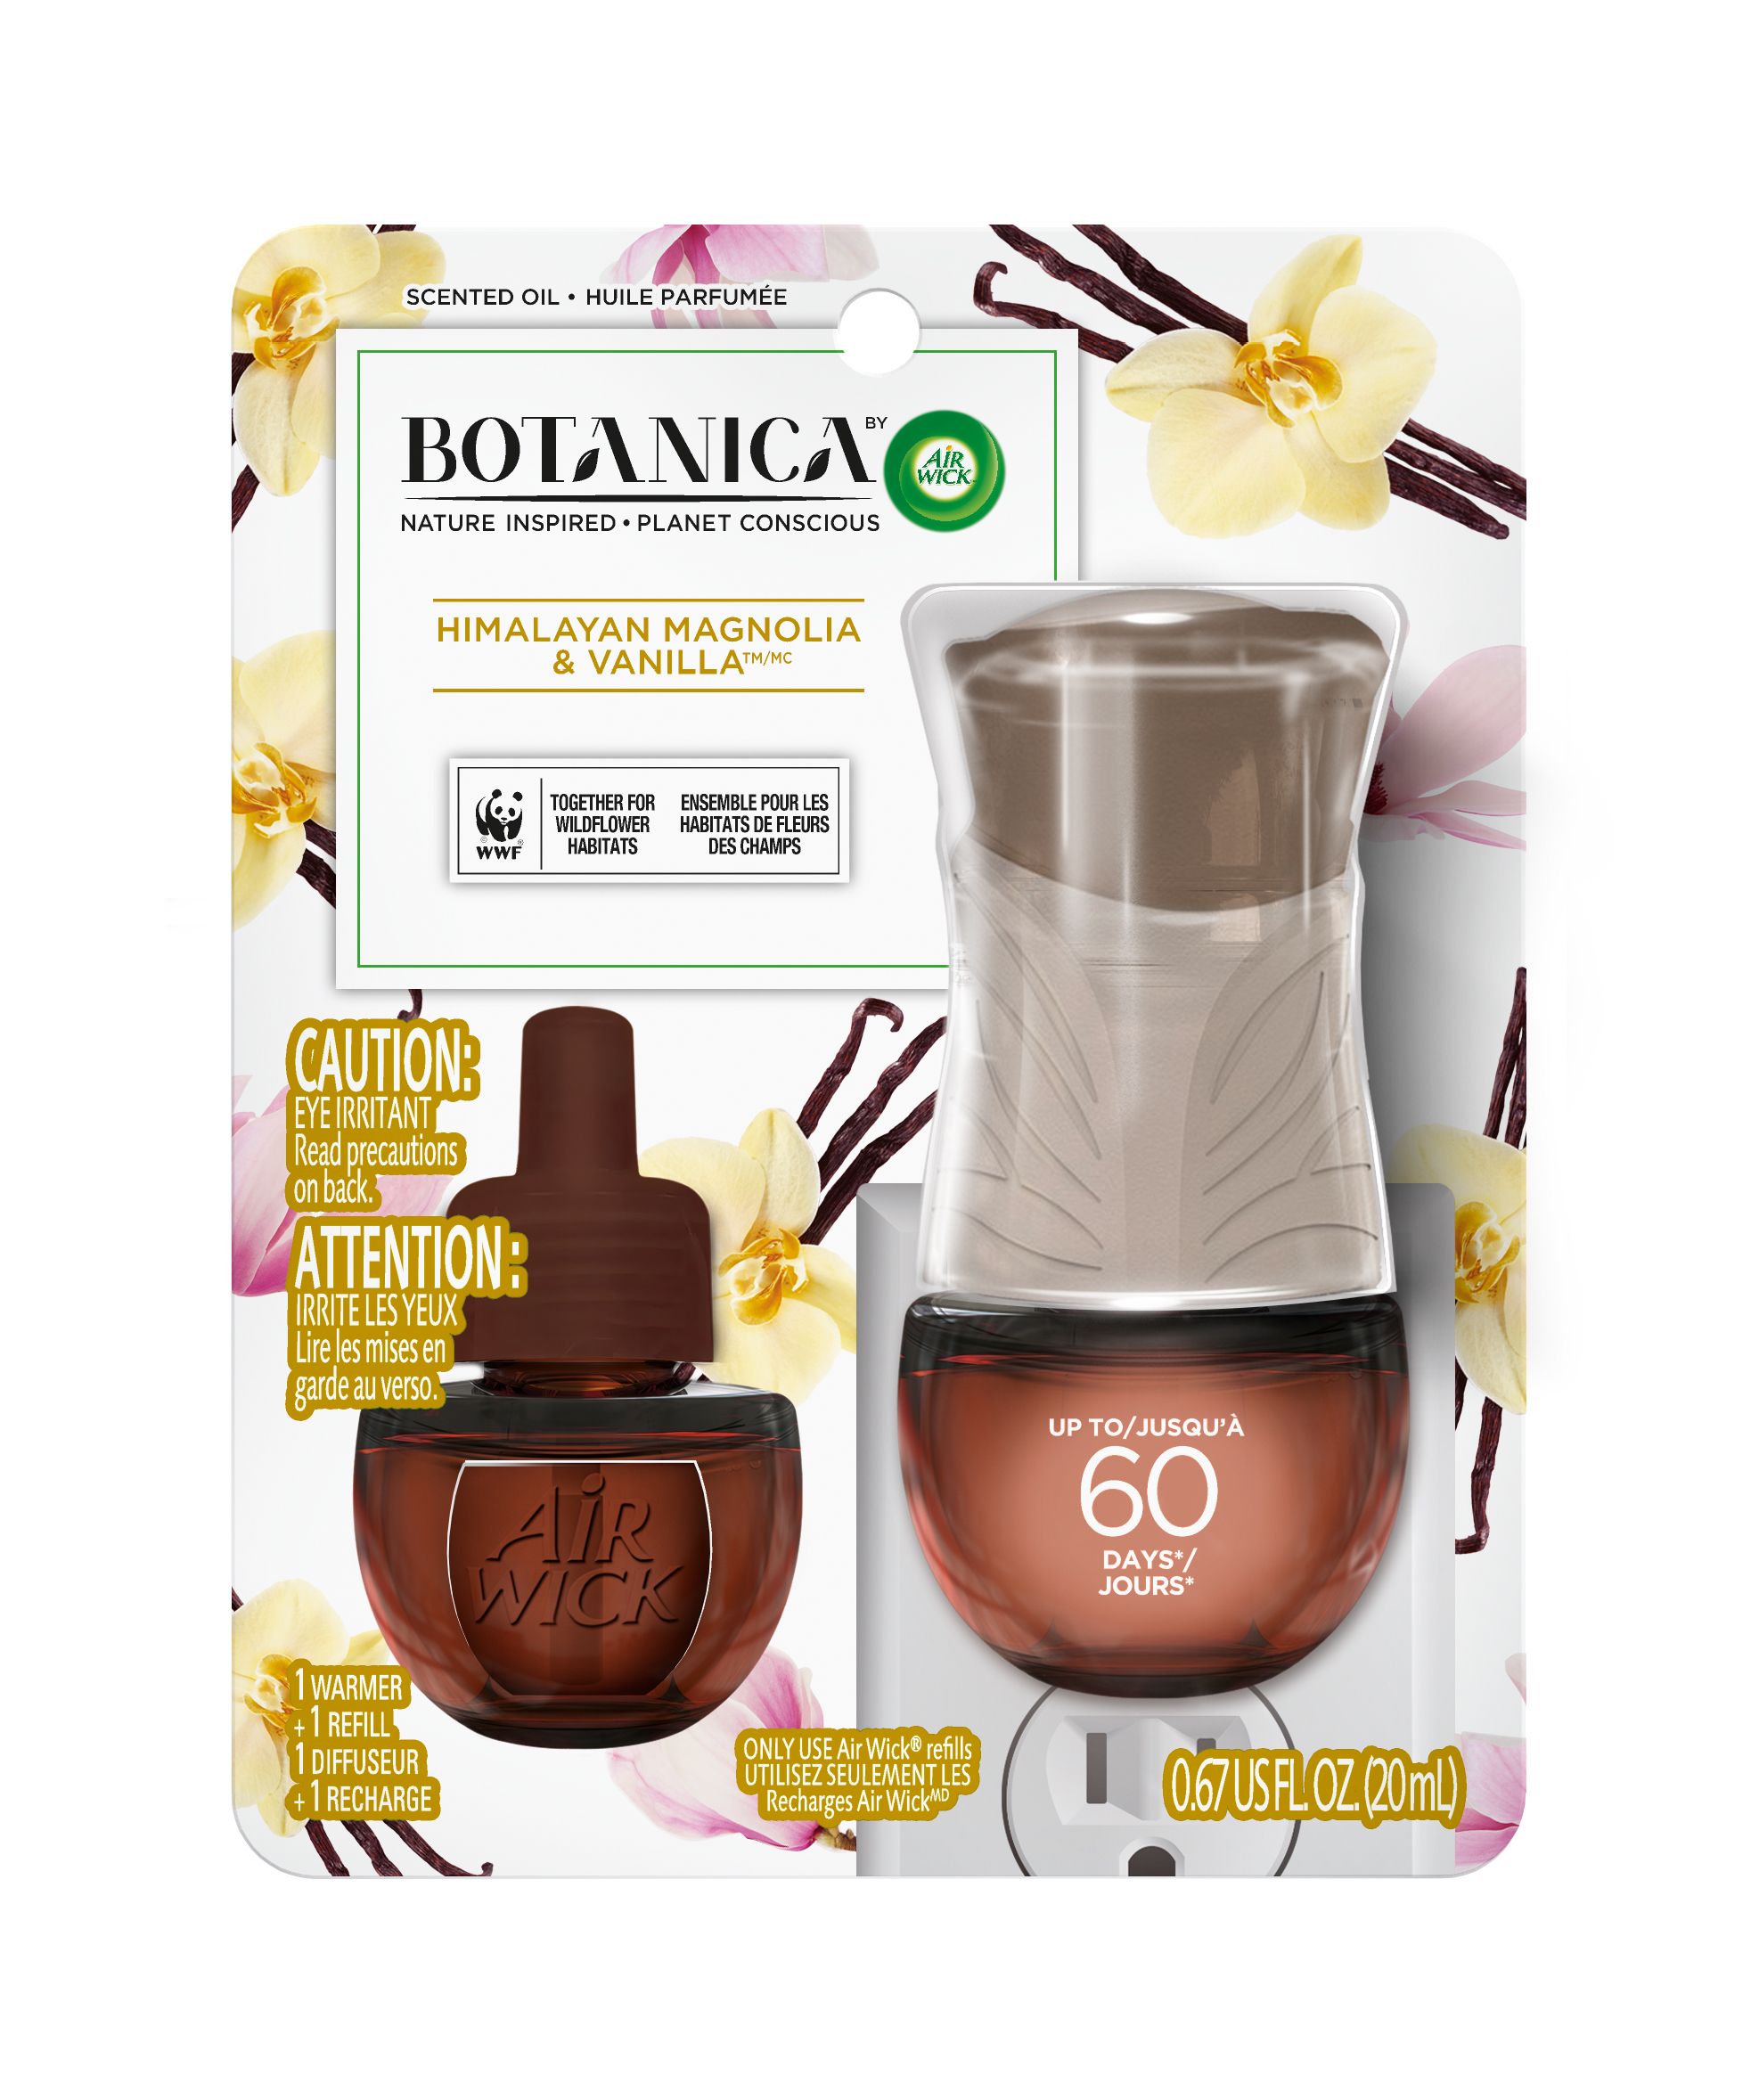 AIR WICK® Botanica Scented Oil - Himalayan Magnolia & Vanilla - Kit (Canada)